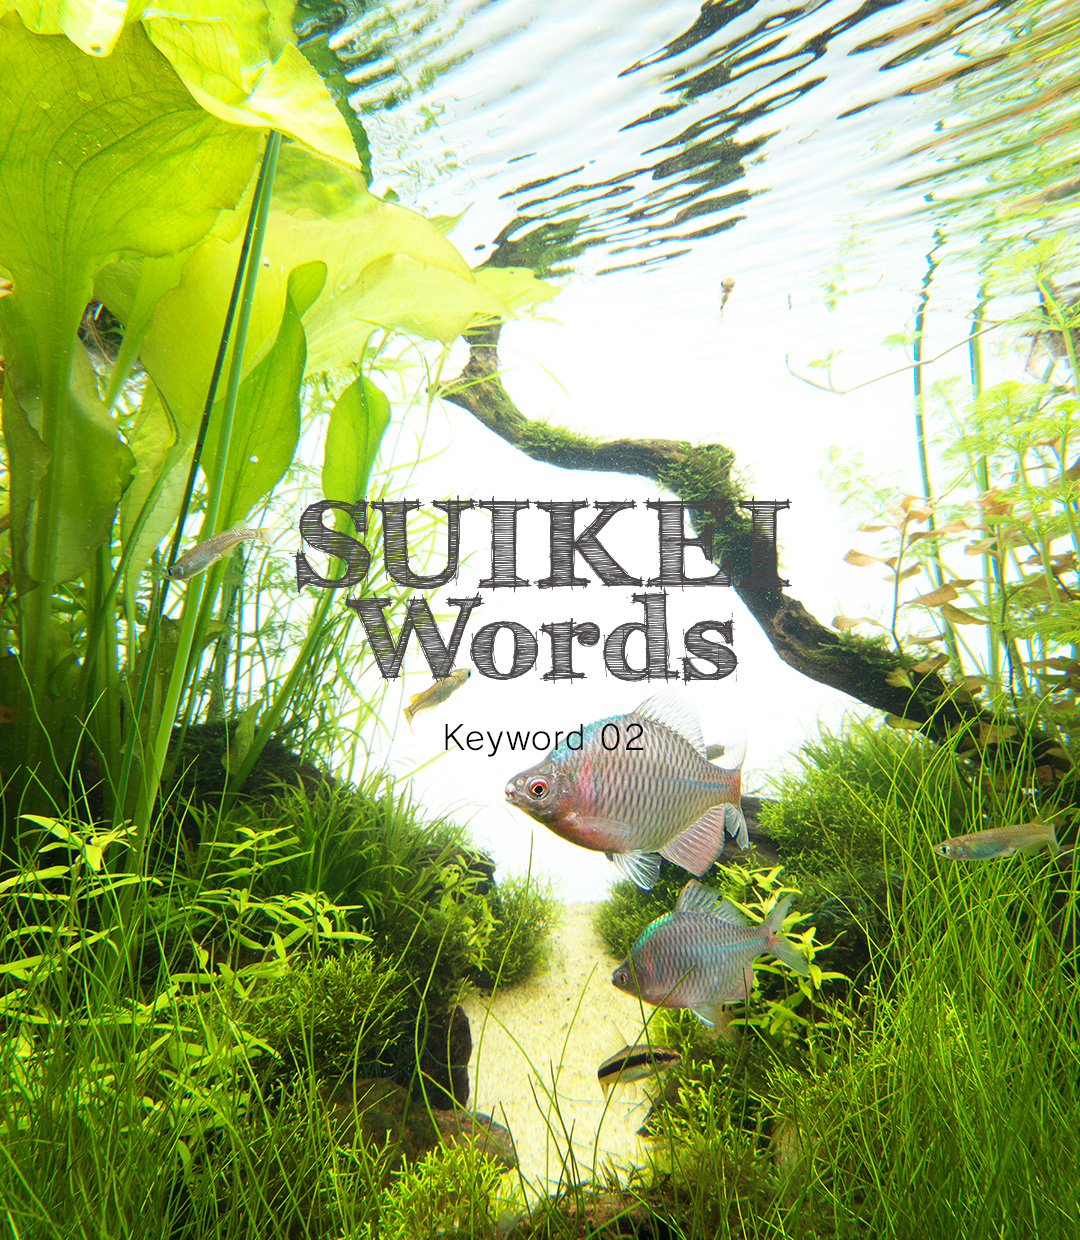 SUIKEI WORDS Keyword 03 ‘Lending a depth to aquascapes’